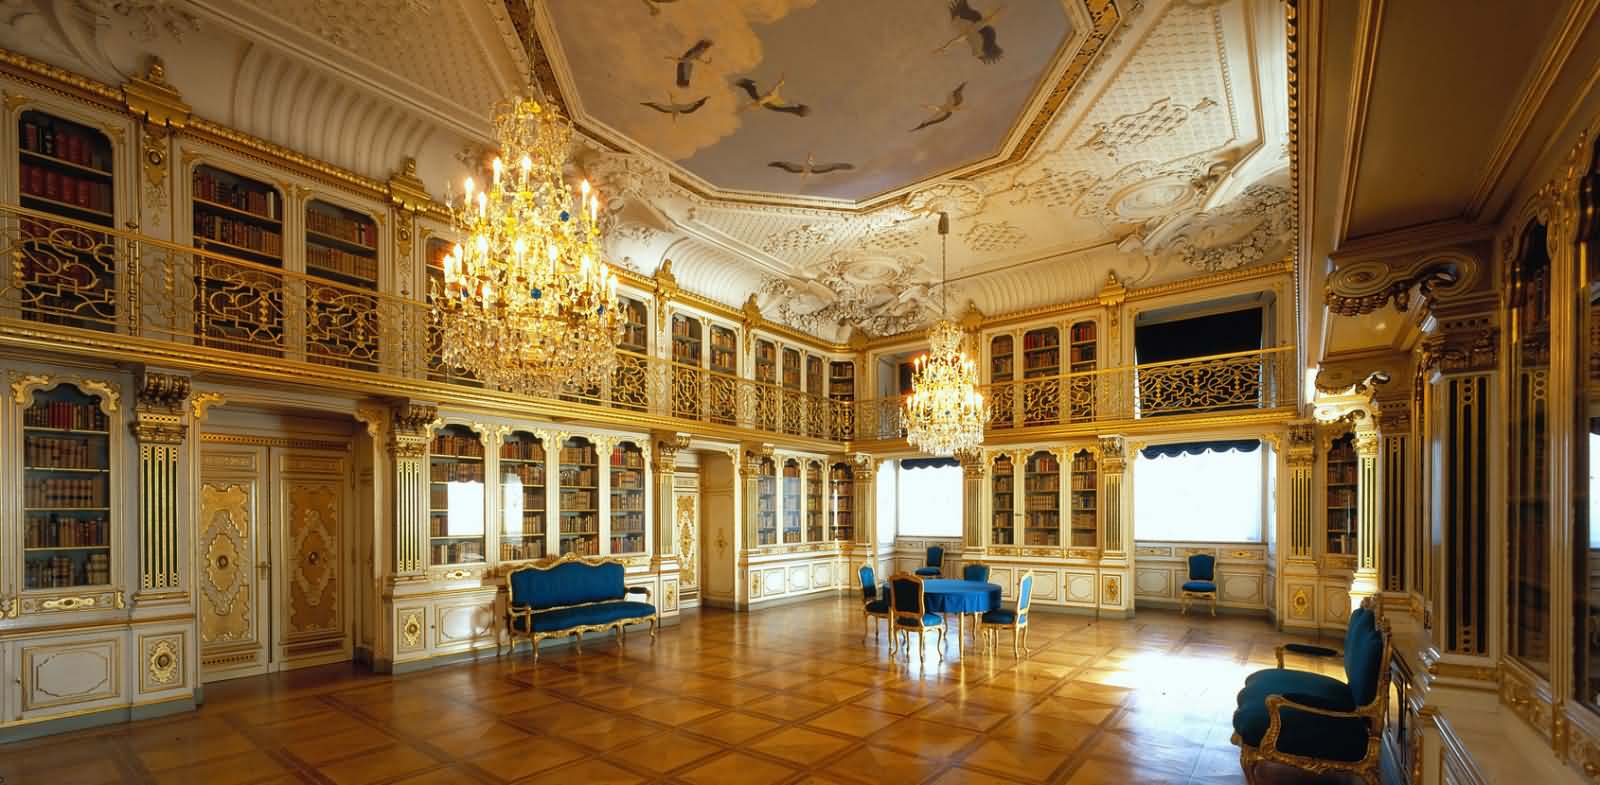 Room Inside The Christiansborg Palace